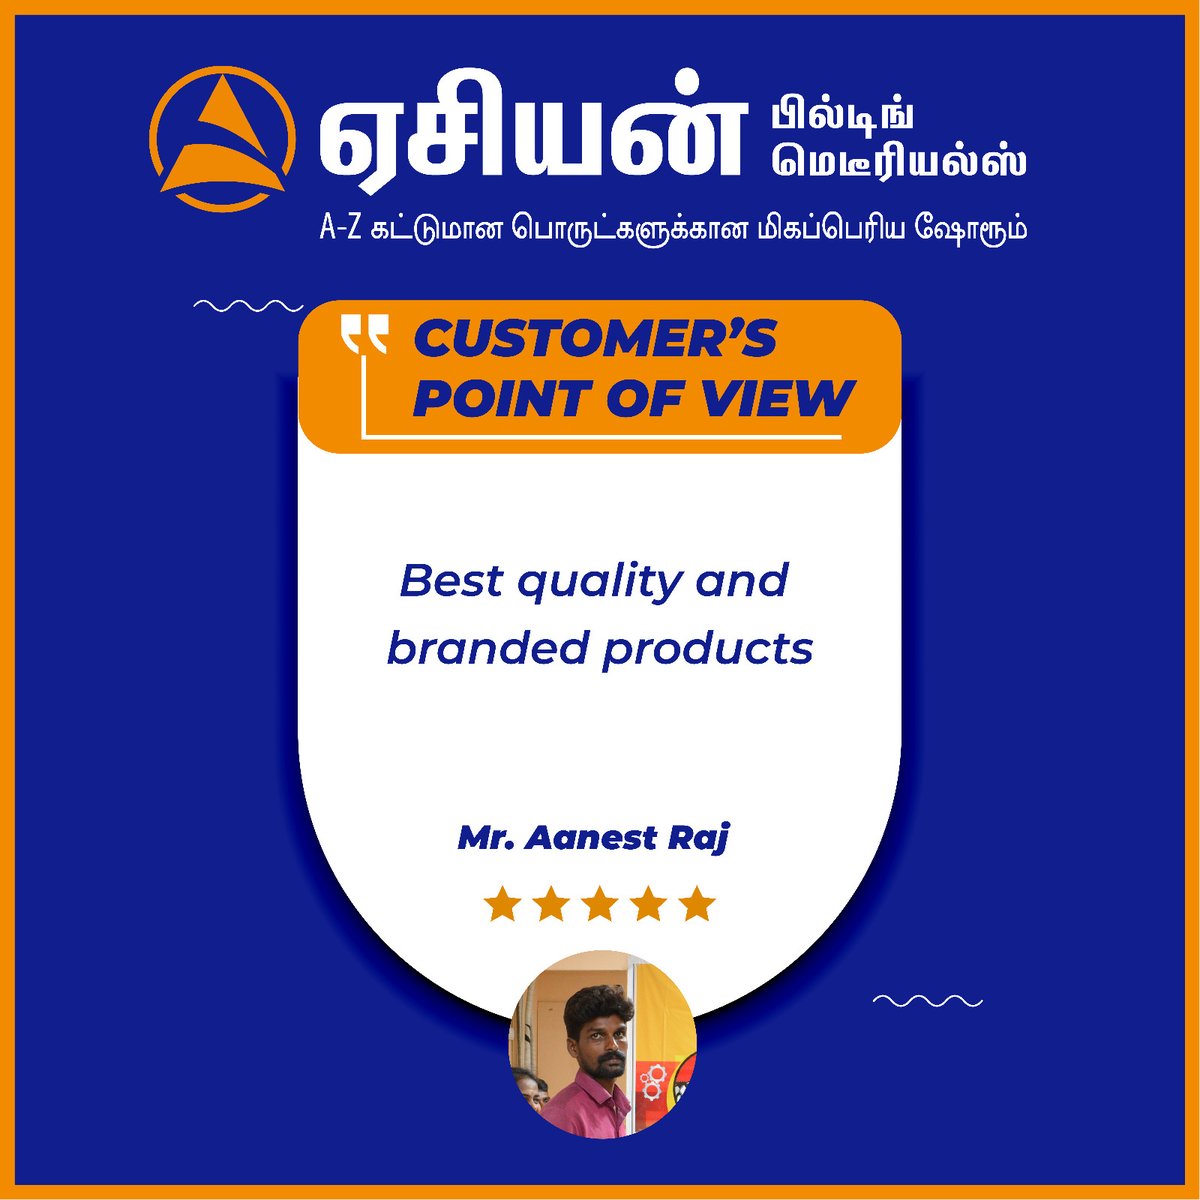 #review #reviews #googlereview #customerfeedback #customersatisfaction #customerservice #customerreview #customerexperience